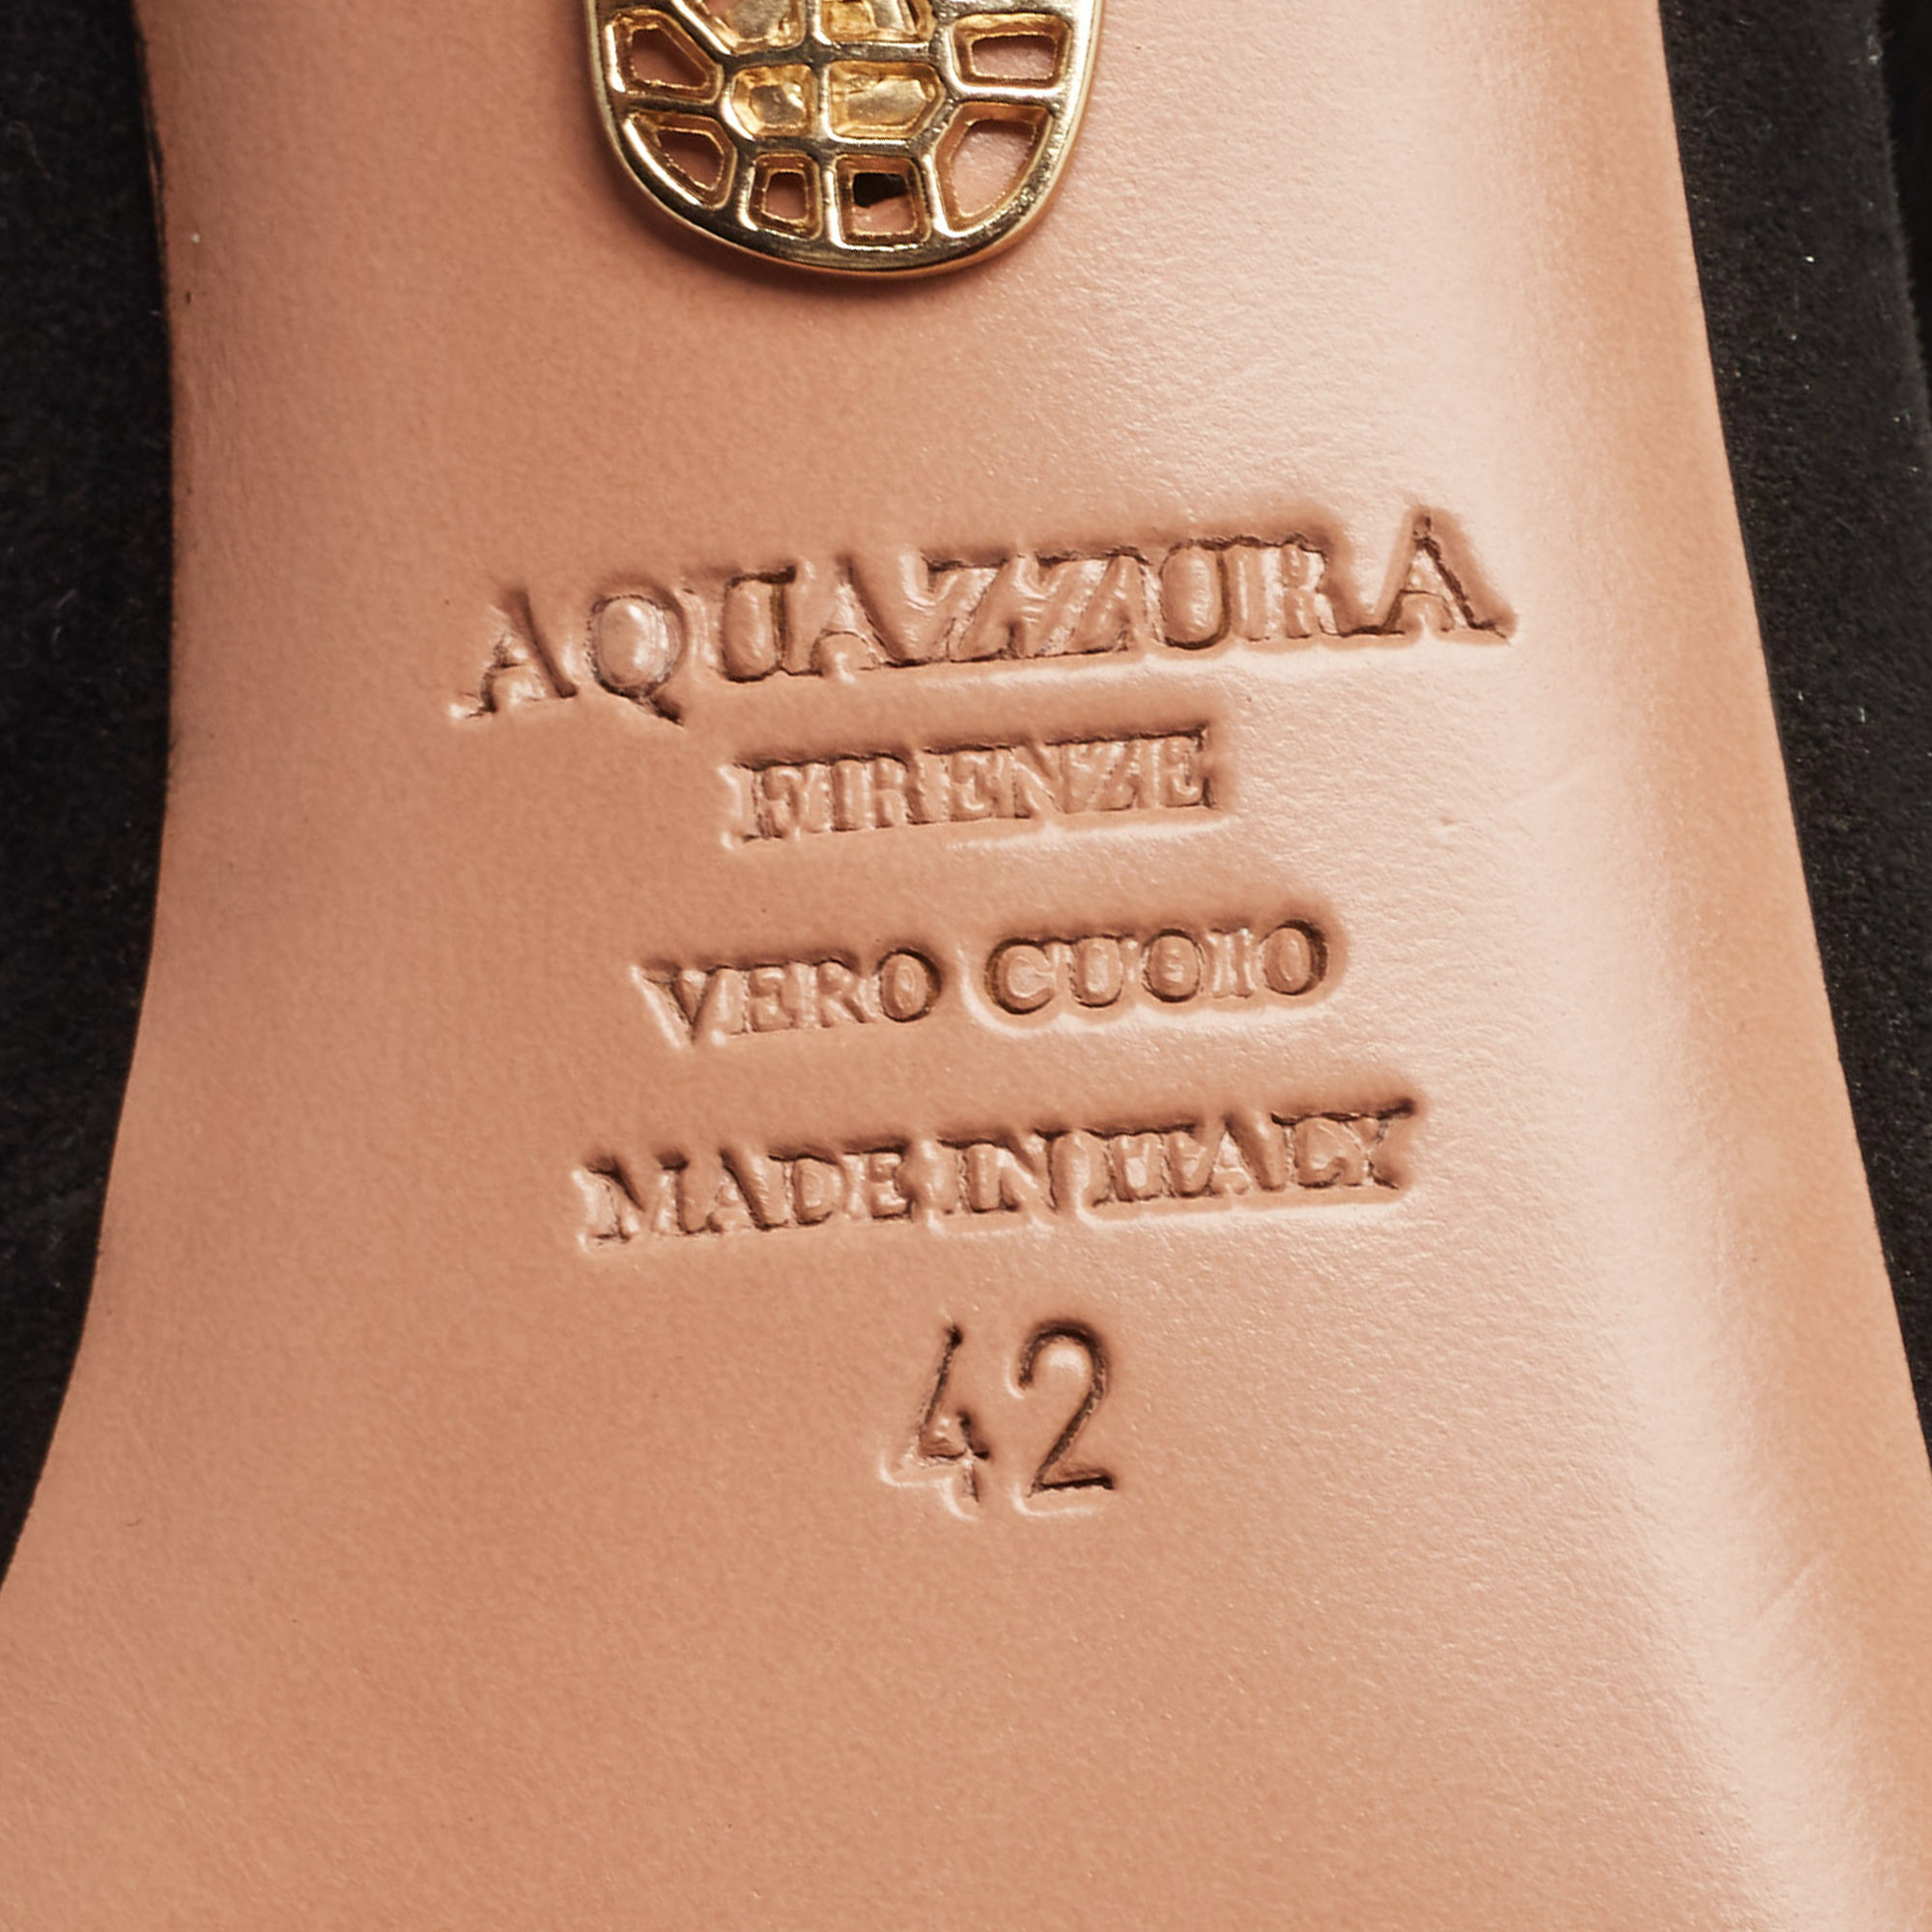 Aquazzura Black Suede Sexy Thing Sandals Size 42